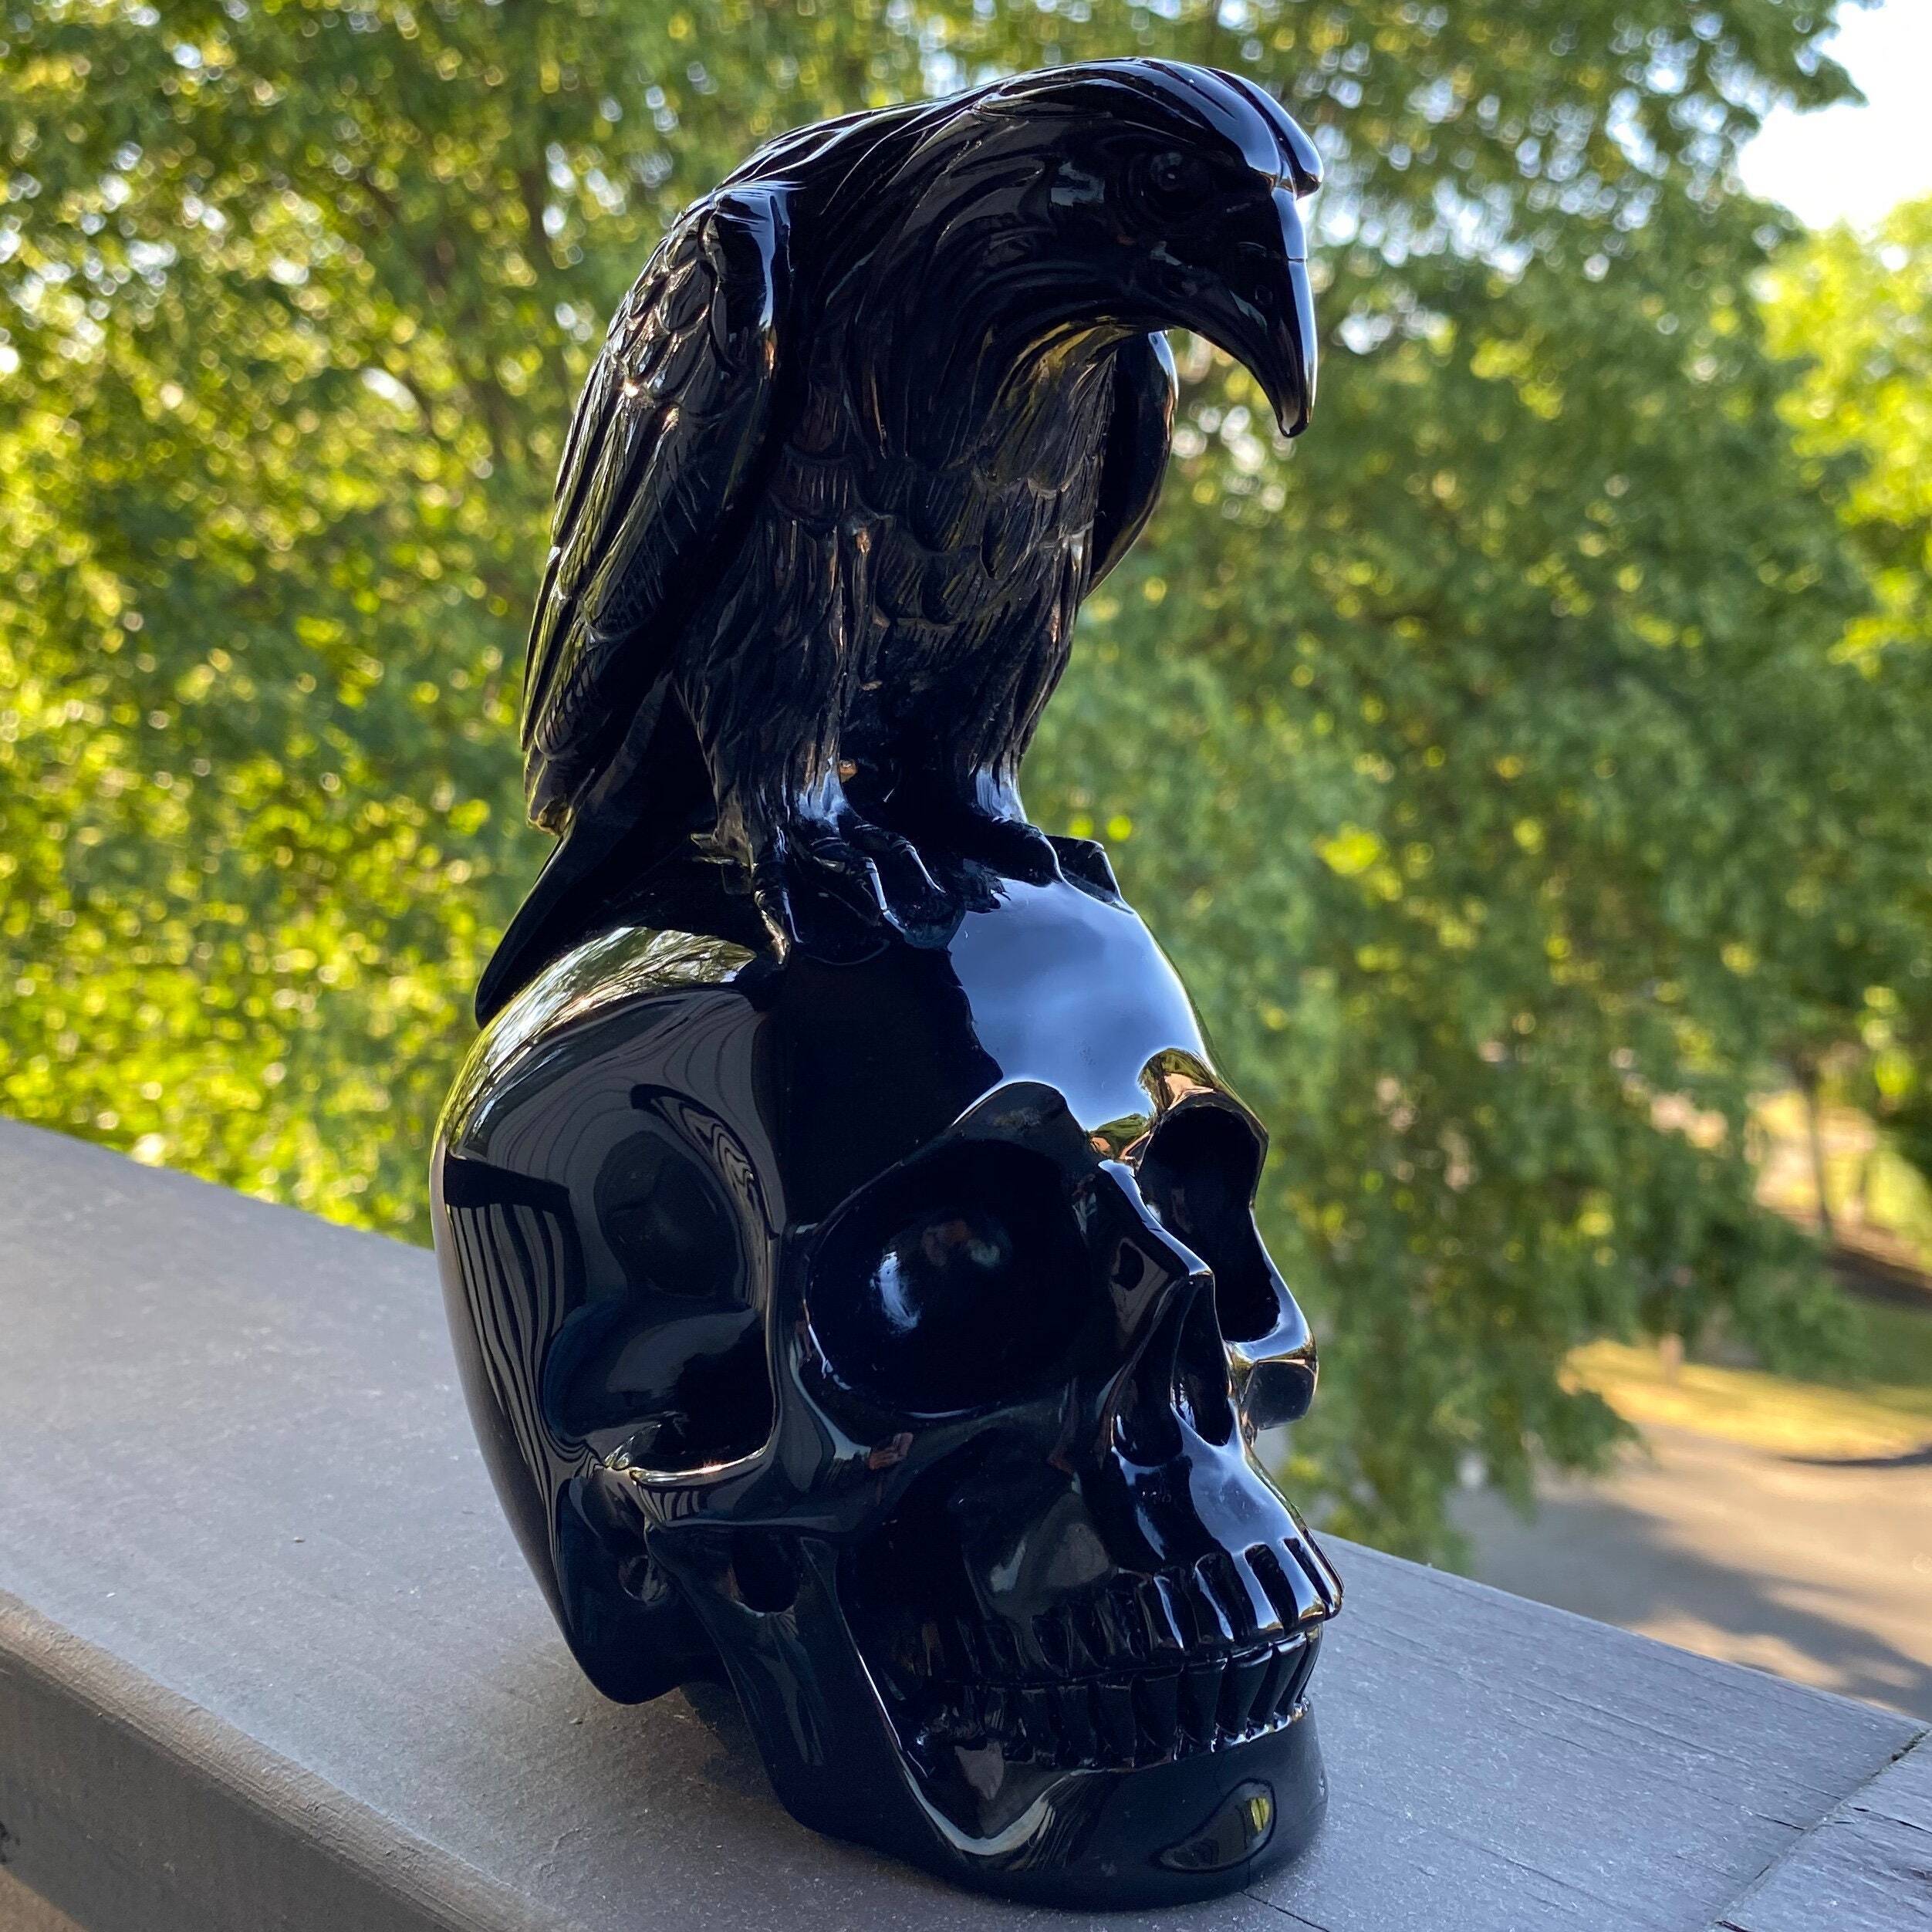 Black Obsidian Crystal Skull and Raven?